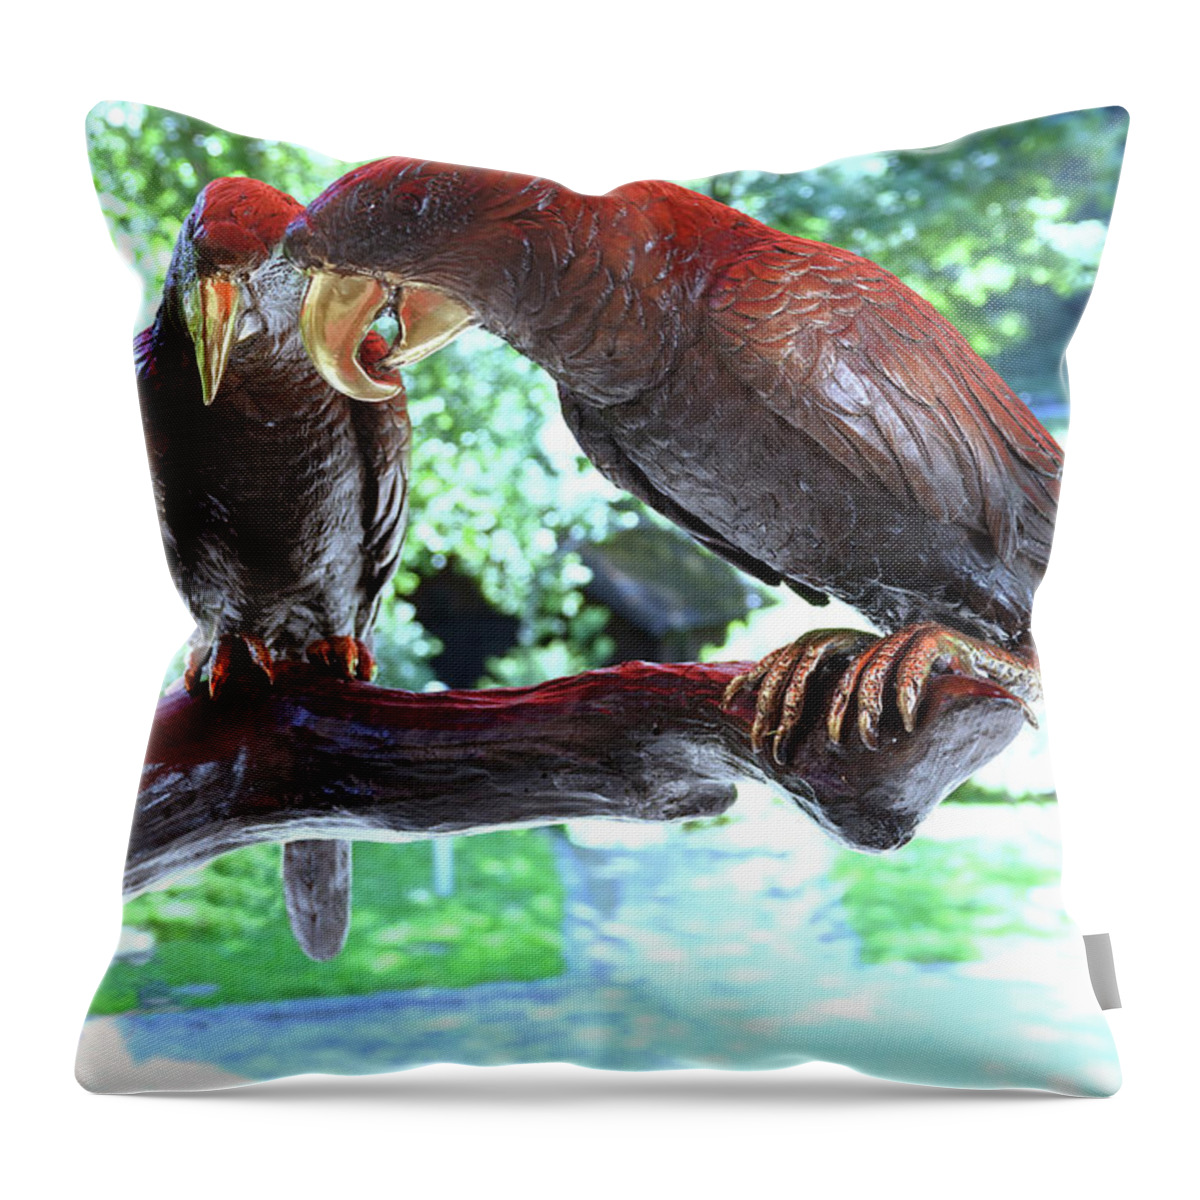 Eagle Throw Pillow featuring the photograph Two Eagles - Ein Adler-Paar by Eva-Maria Di Bella